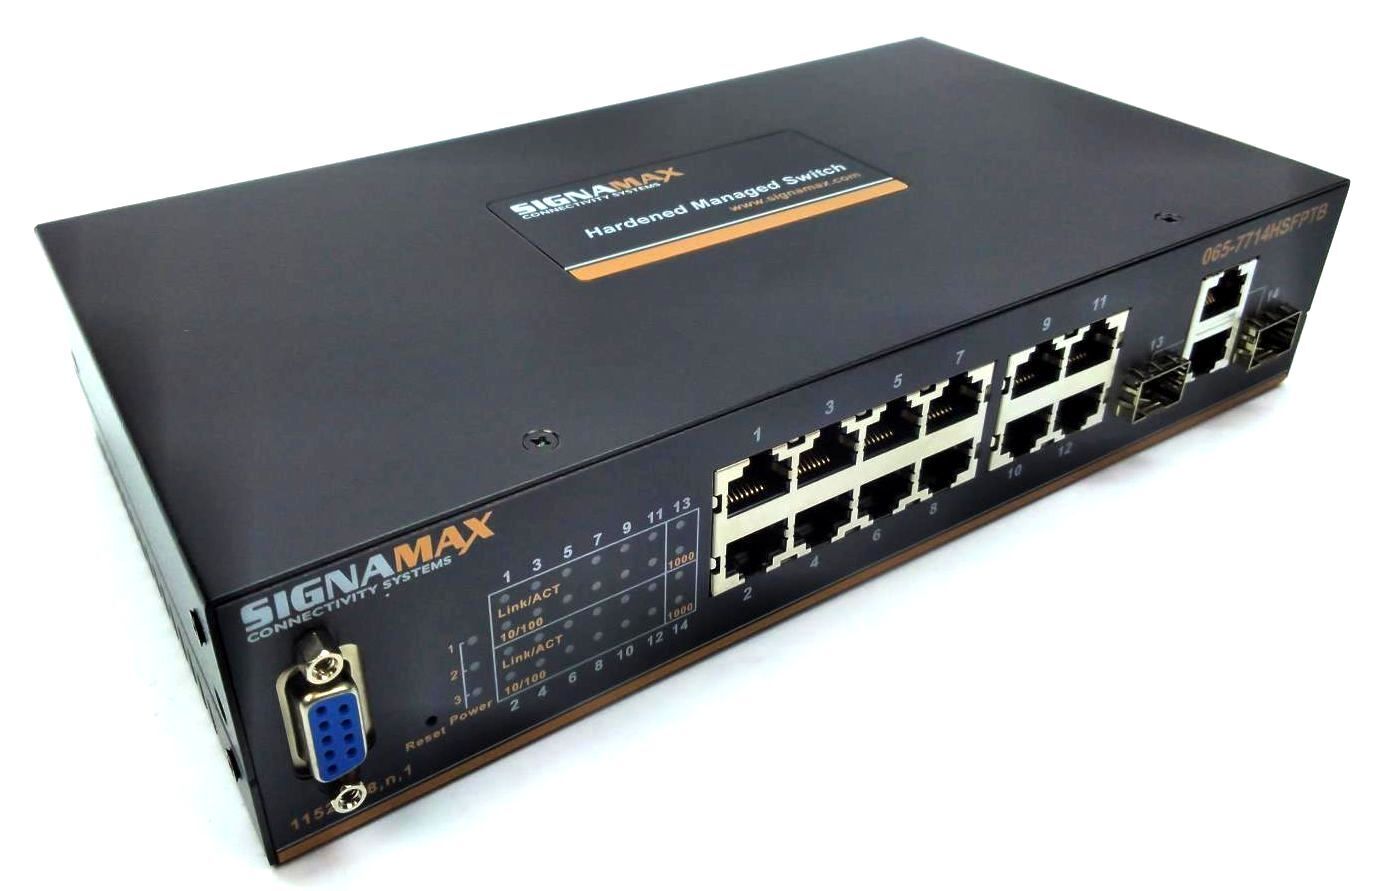 Signamax 12-PORT 10/100T/TX + 2 SFP Industrial Ethernet Switch  065-7714HSFPTB